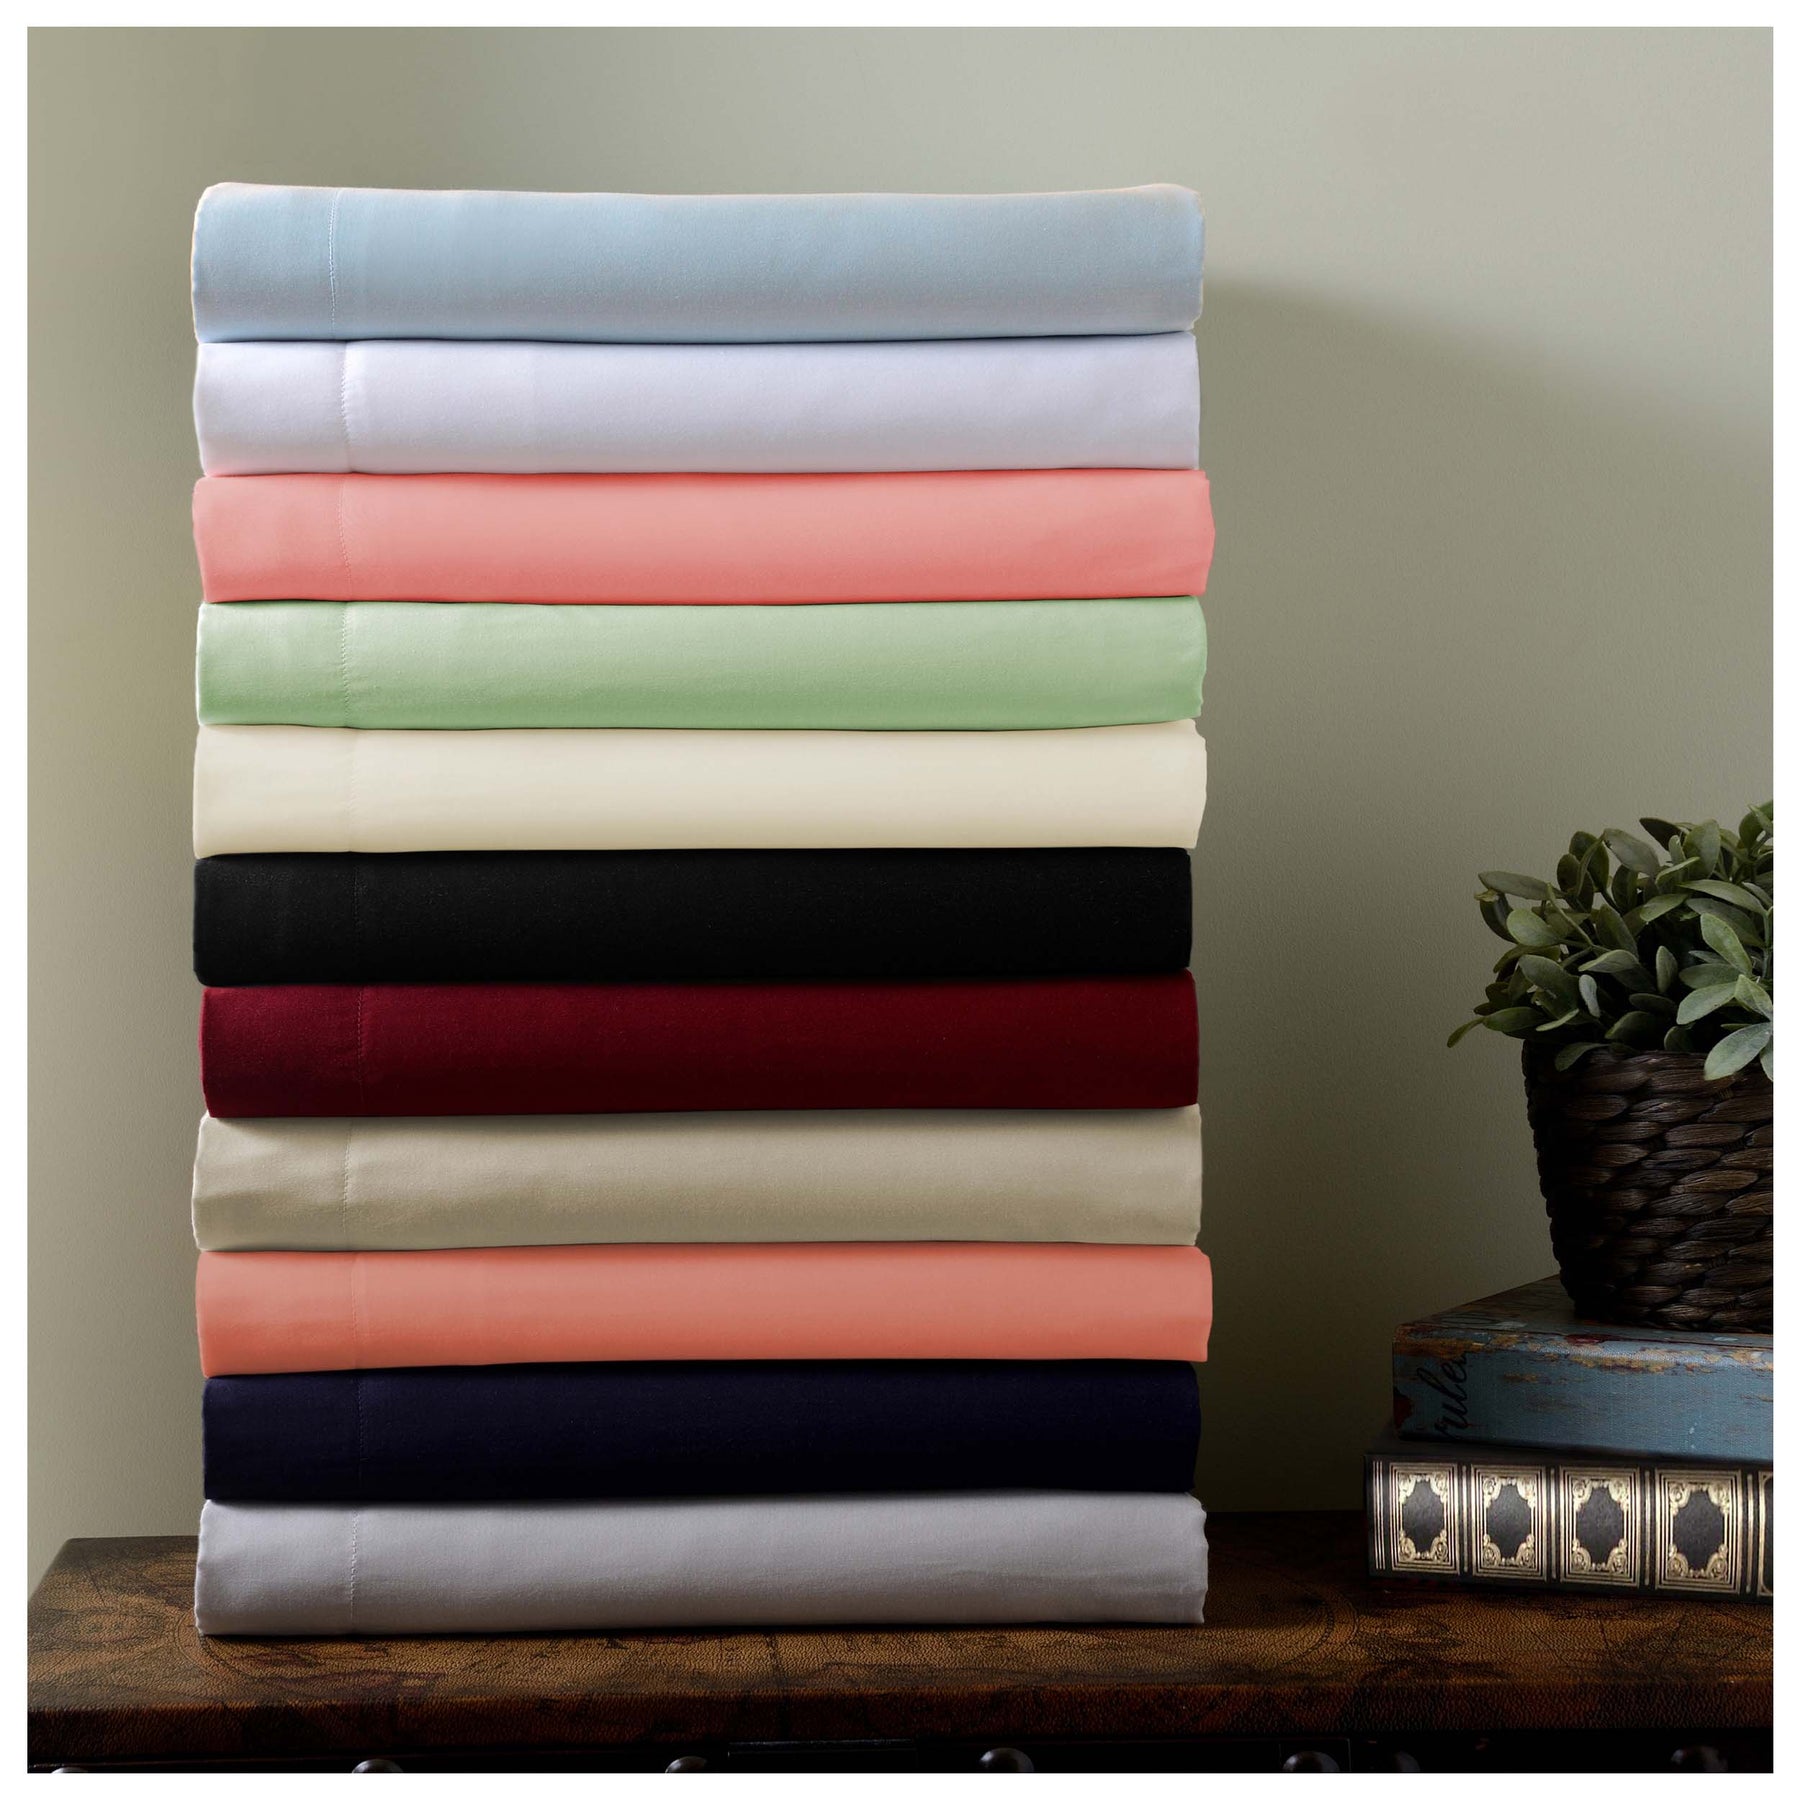 300 Thread Count Cotton Wrinkle Resistant Deep Pocket Solid Sheet Set - Light Grey